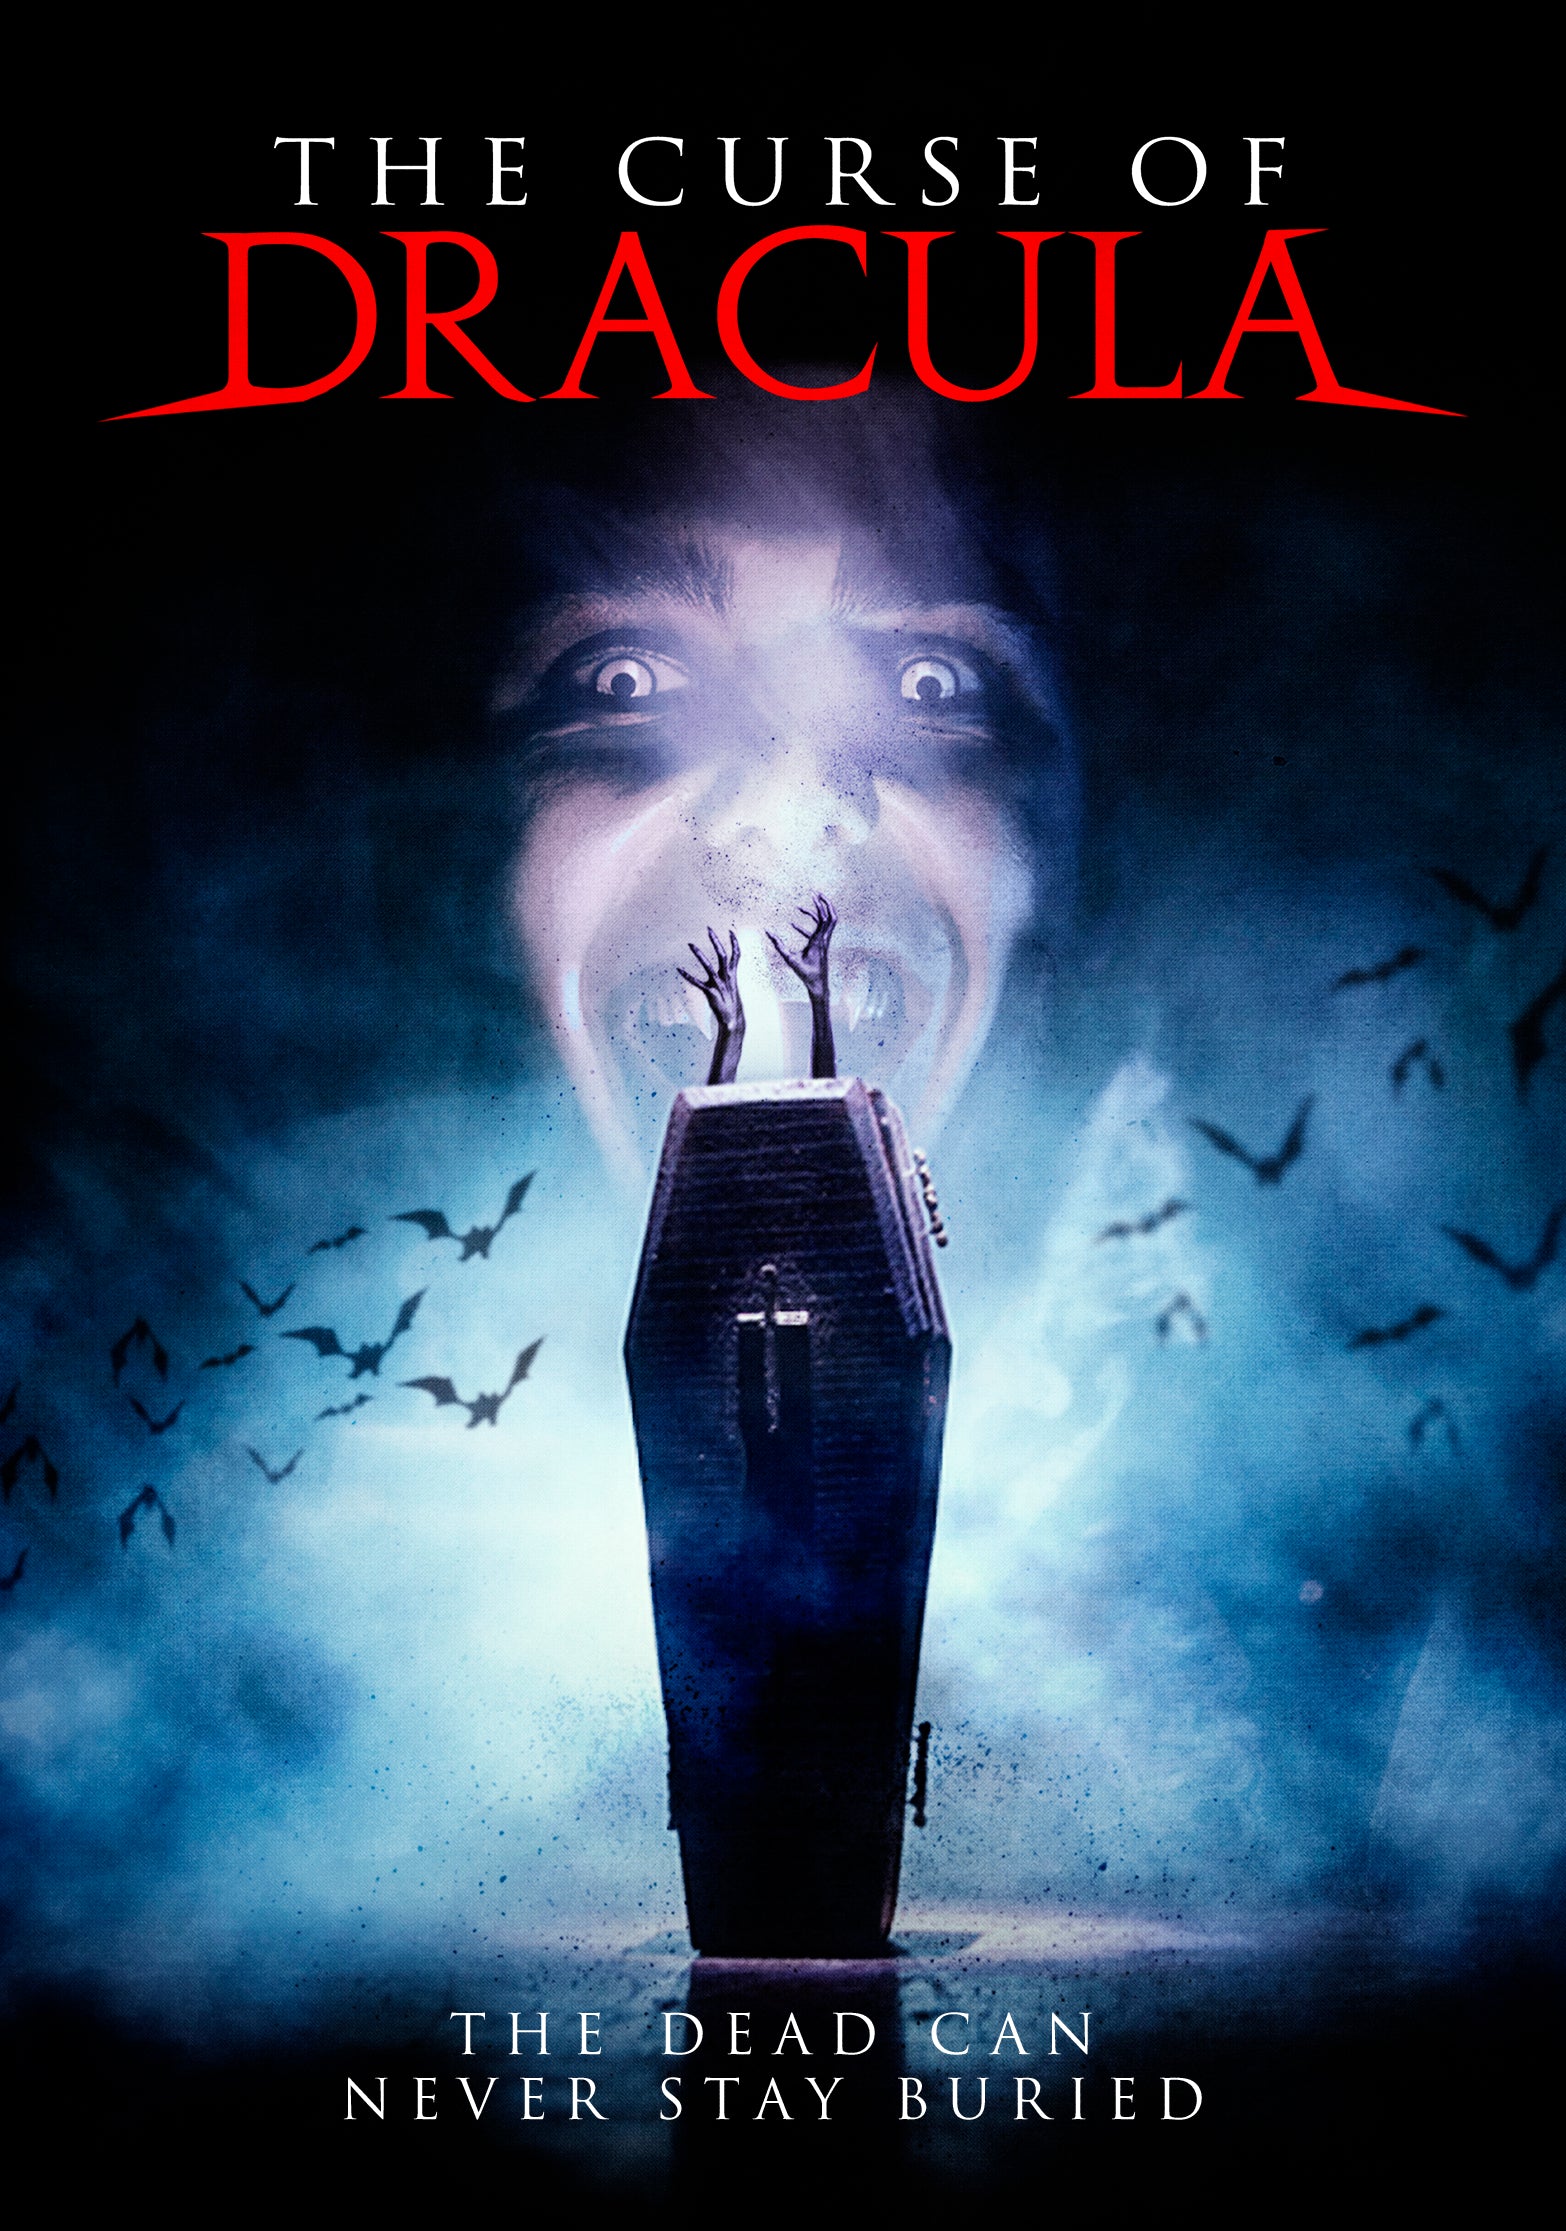 THE CURSE OF DRACULA DVD